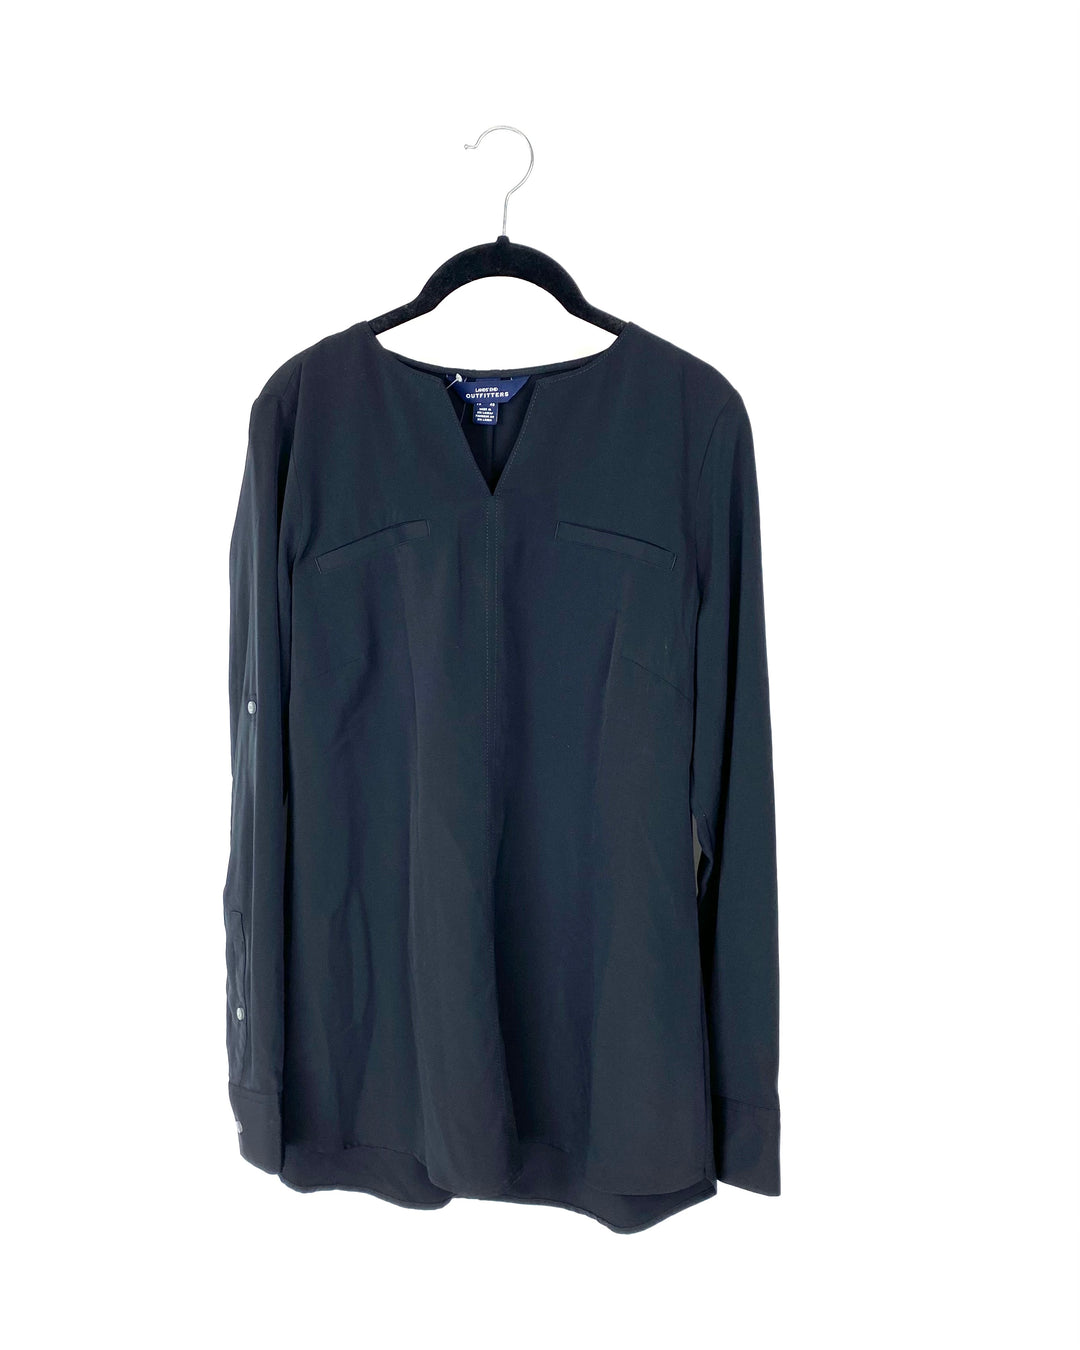 Black Long Sleeve Blouse - Size 8